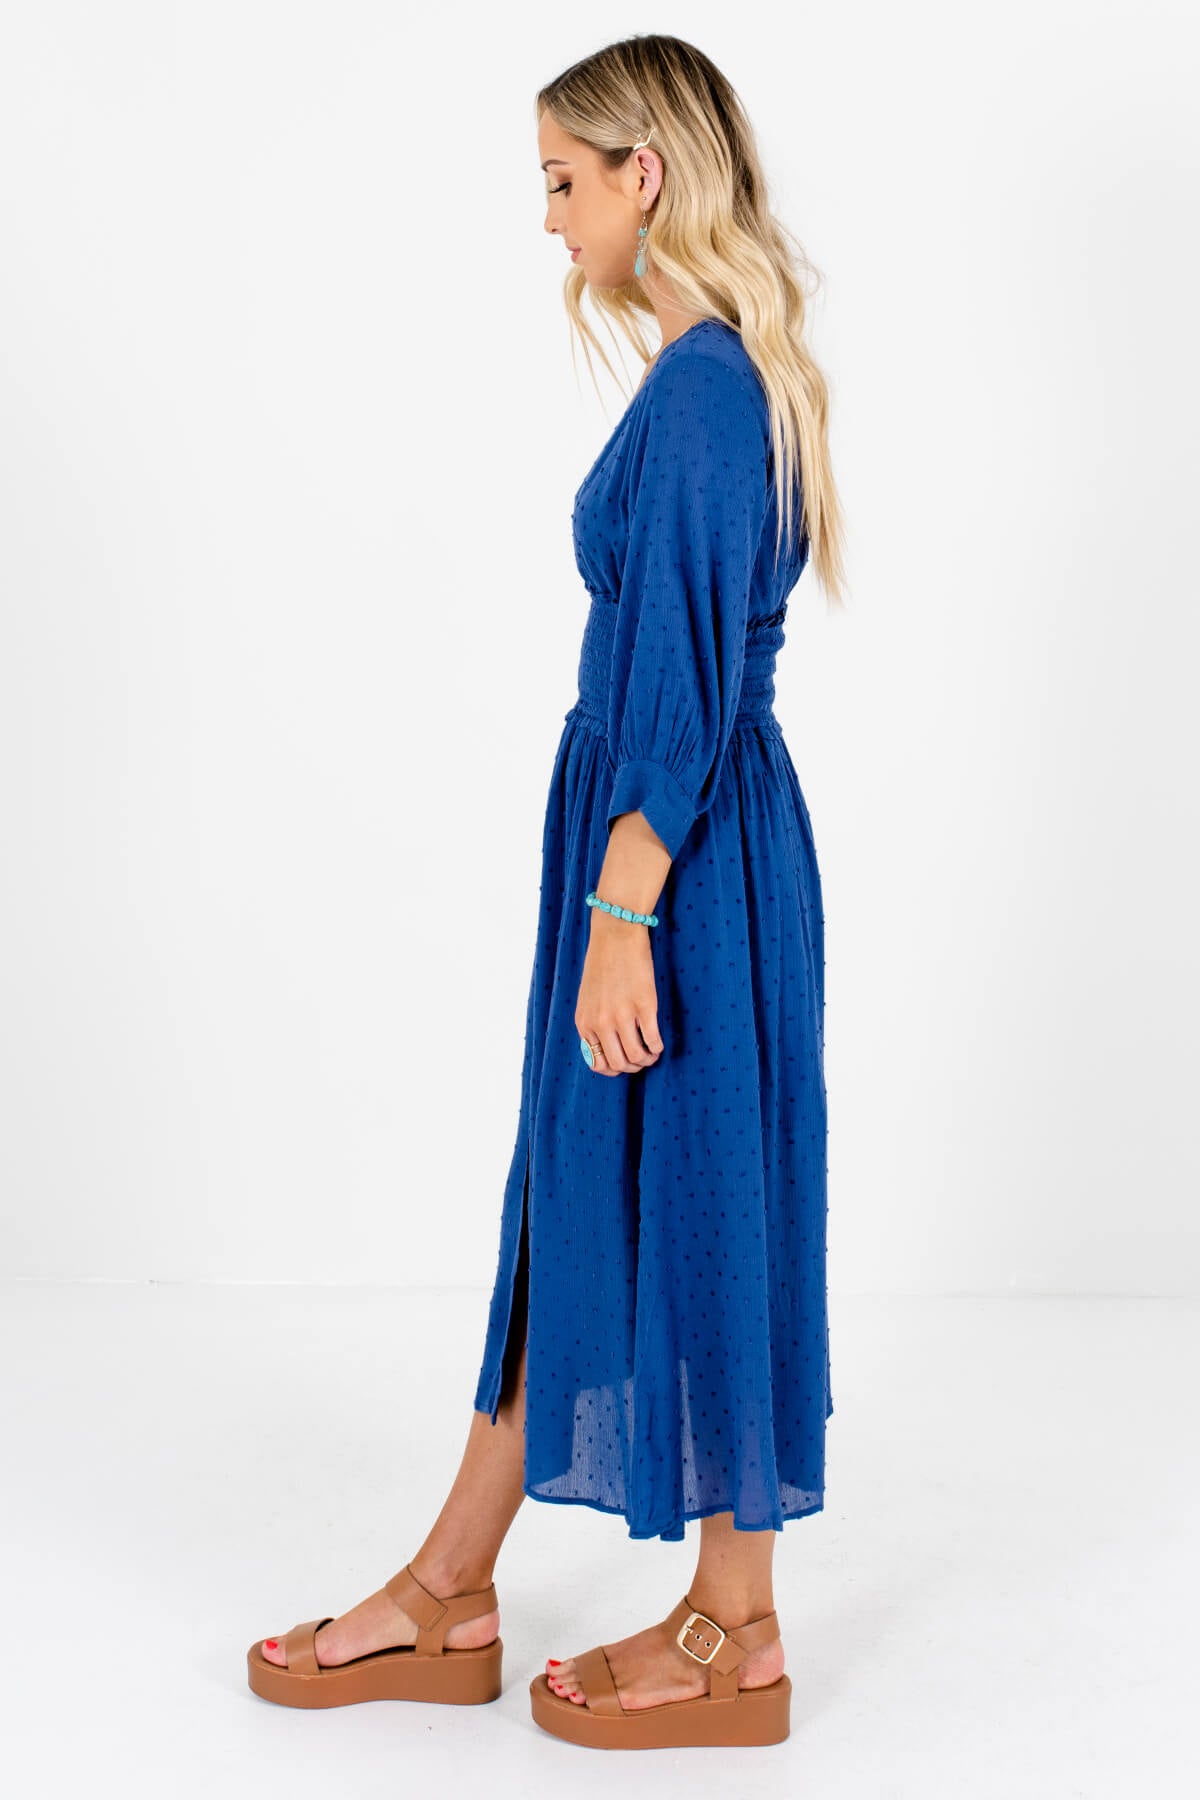 Blue 3/4 Length Sleeve Boutique Midi Dresses for Women